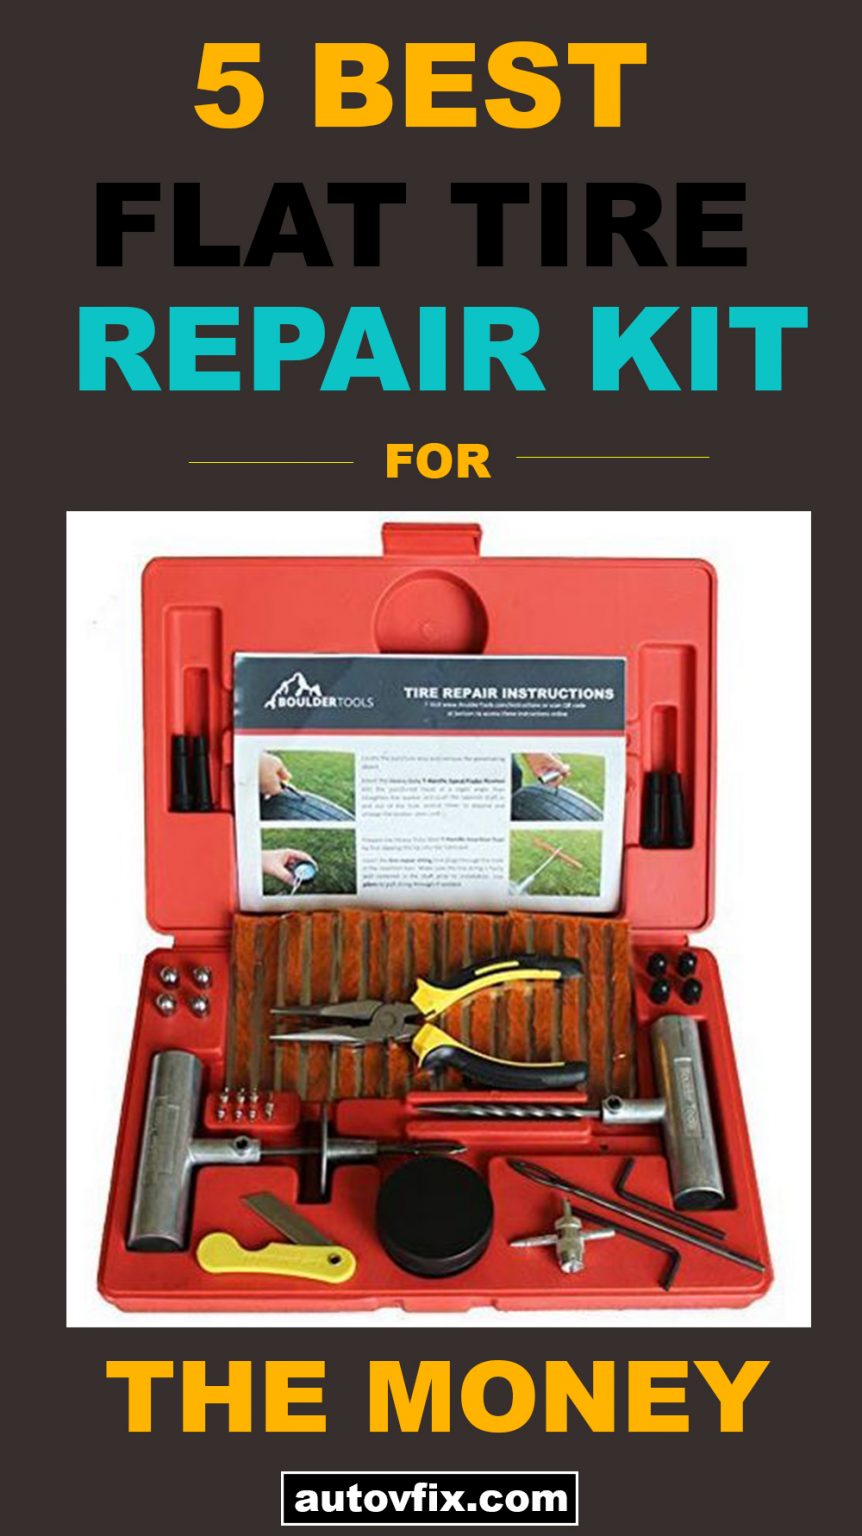 6 Best Flat Tire Repair Kit on Amazon (Professional Tire Repair Kit)